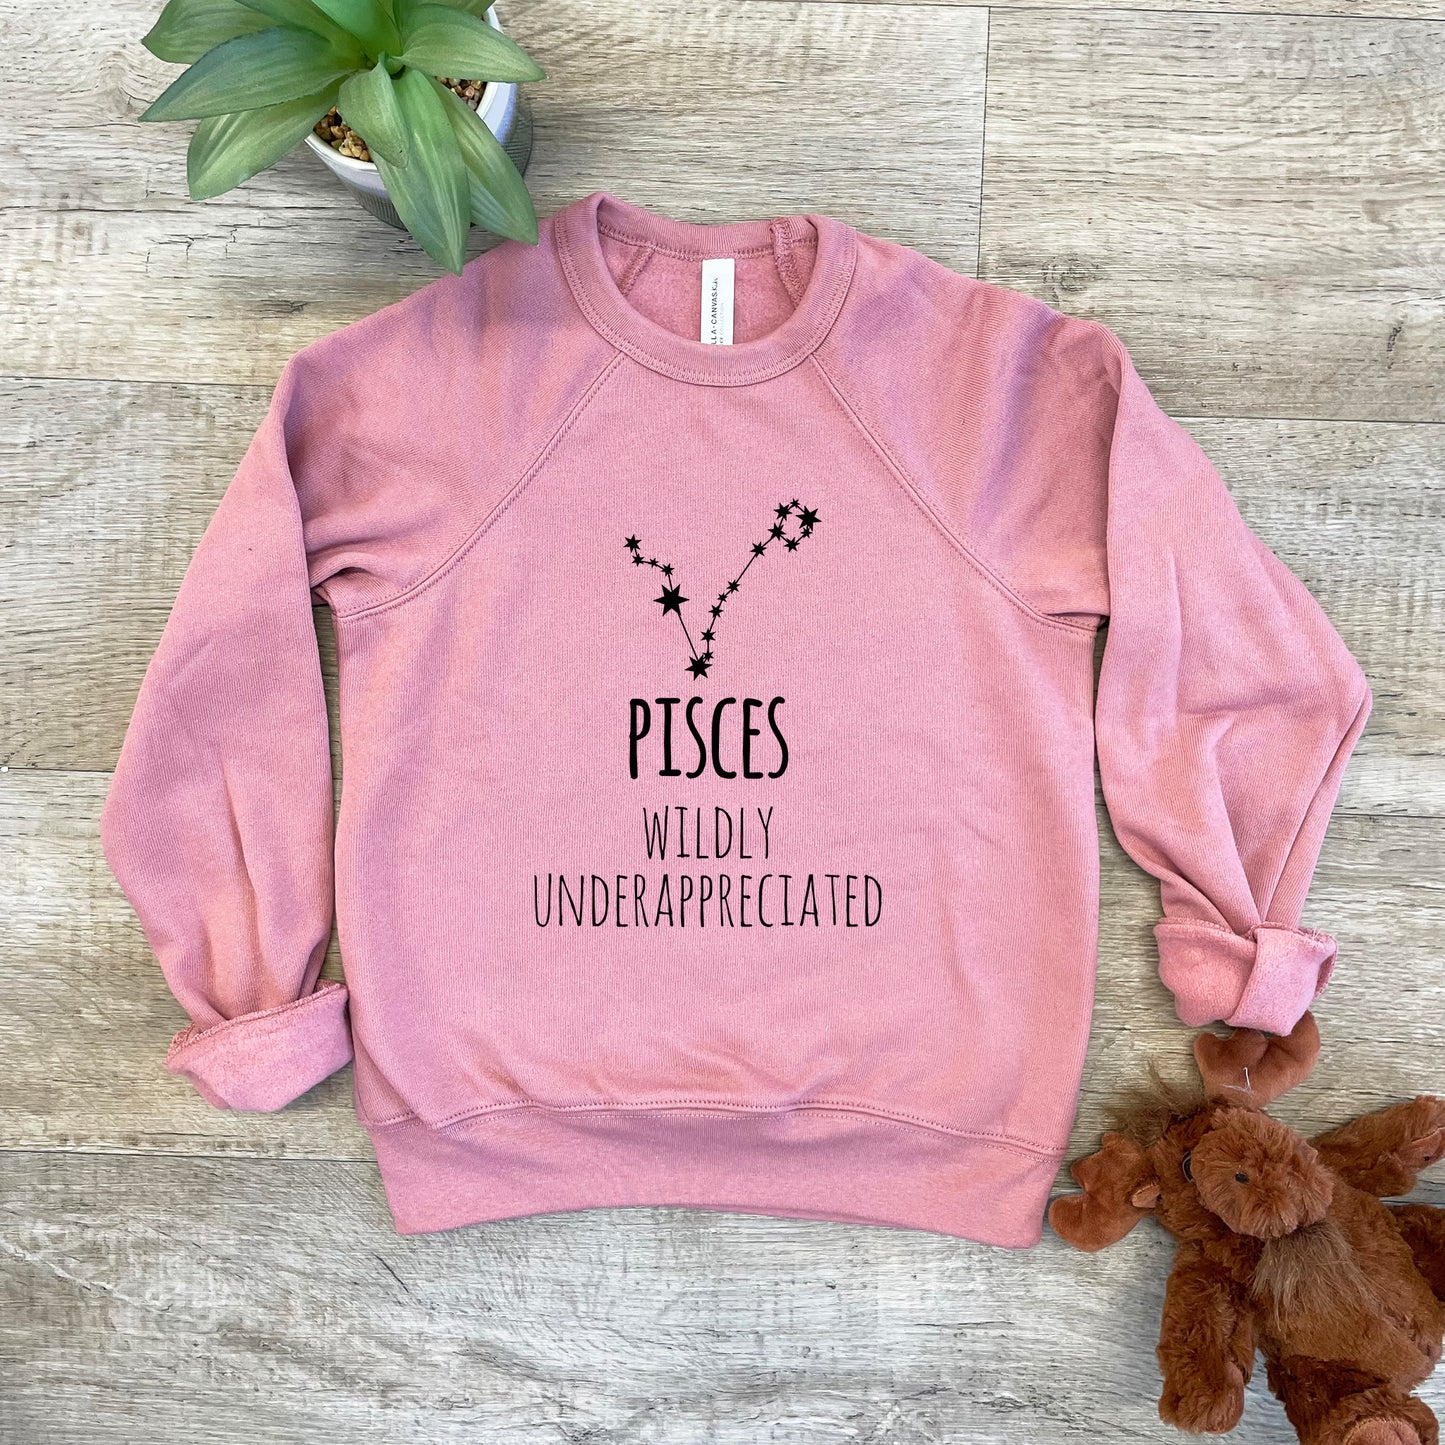 Pisces (Wildly Underappreciated) - Kid's Sweatshirt - Heather Gray or Mauve